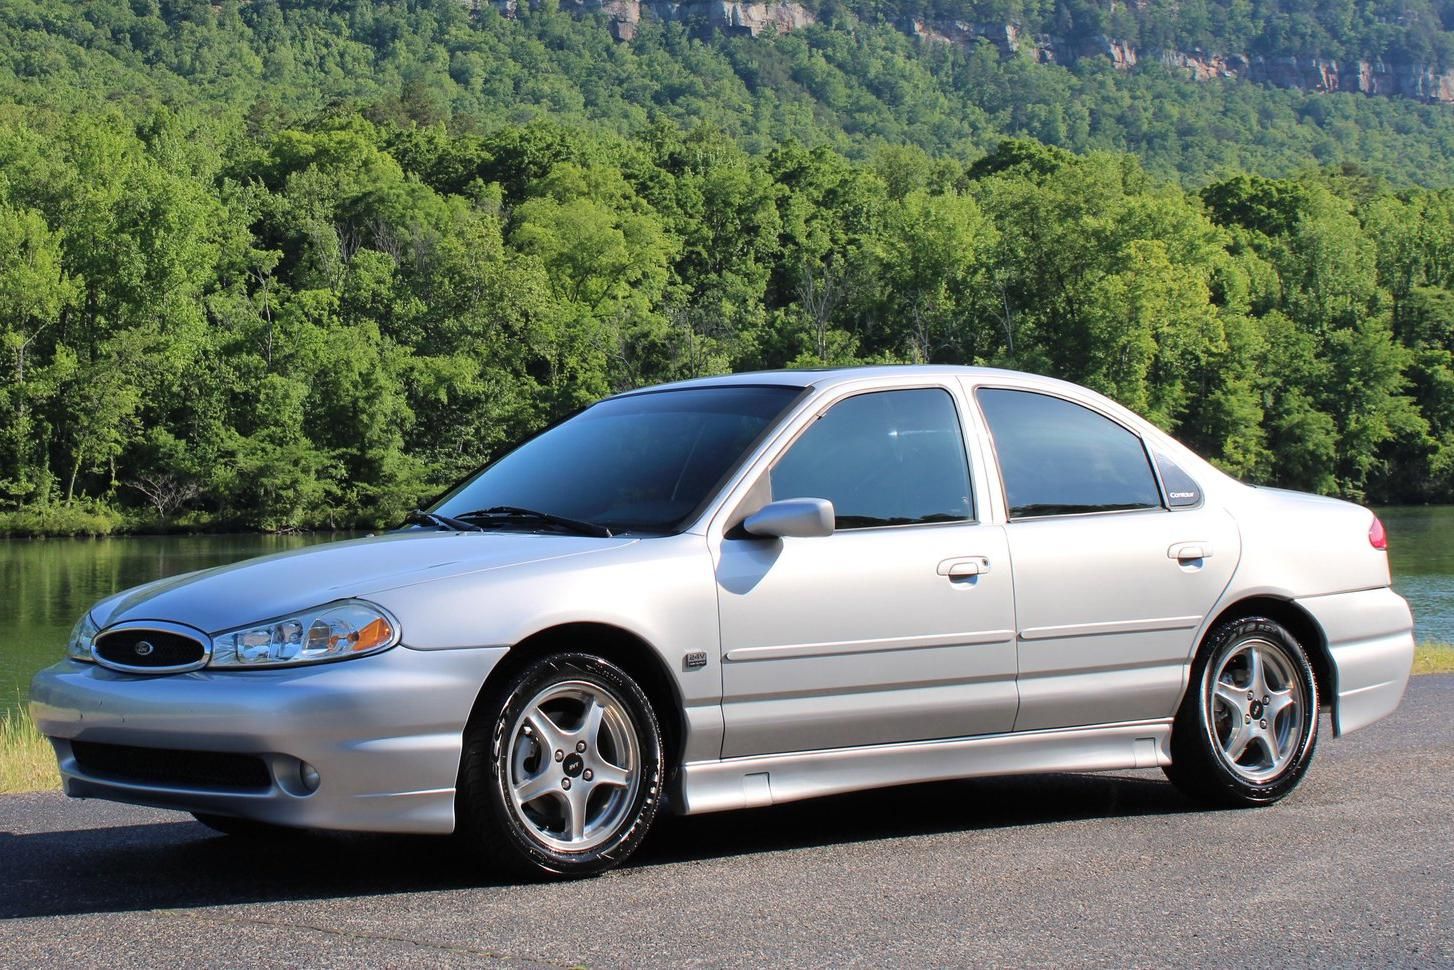 1999 Ford Contour SVT Auction Provides Chance To Snag Rare Car